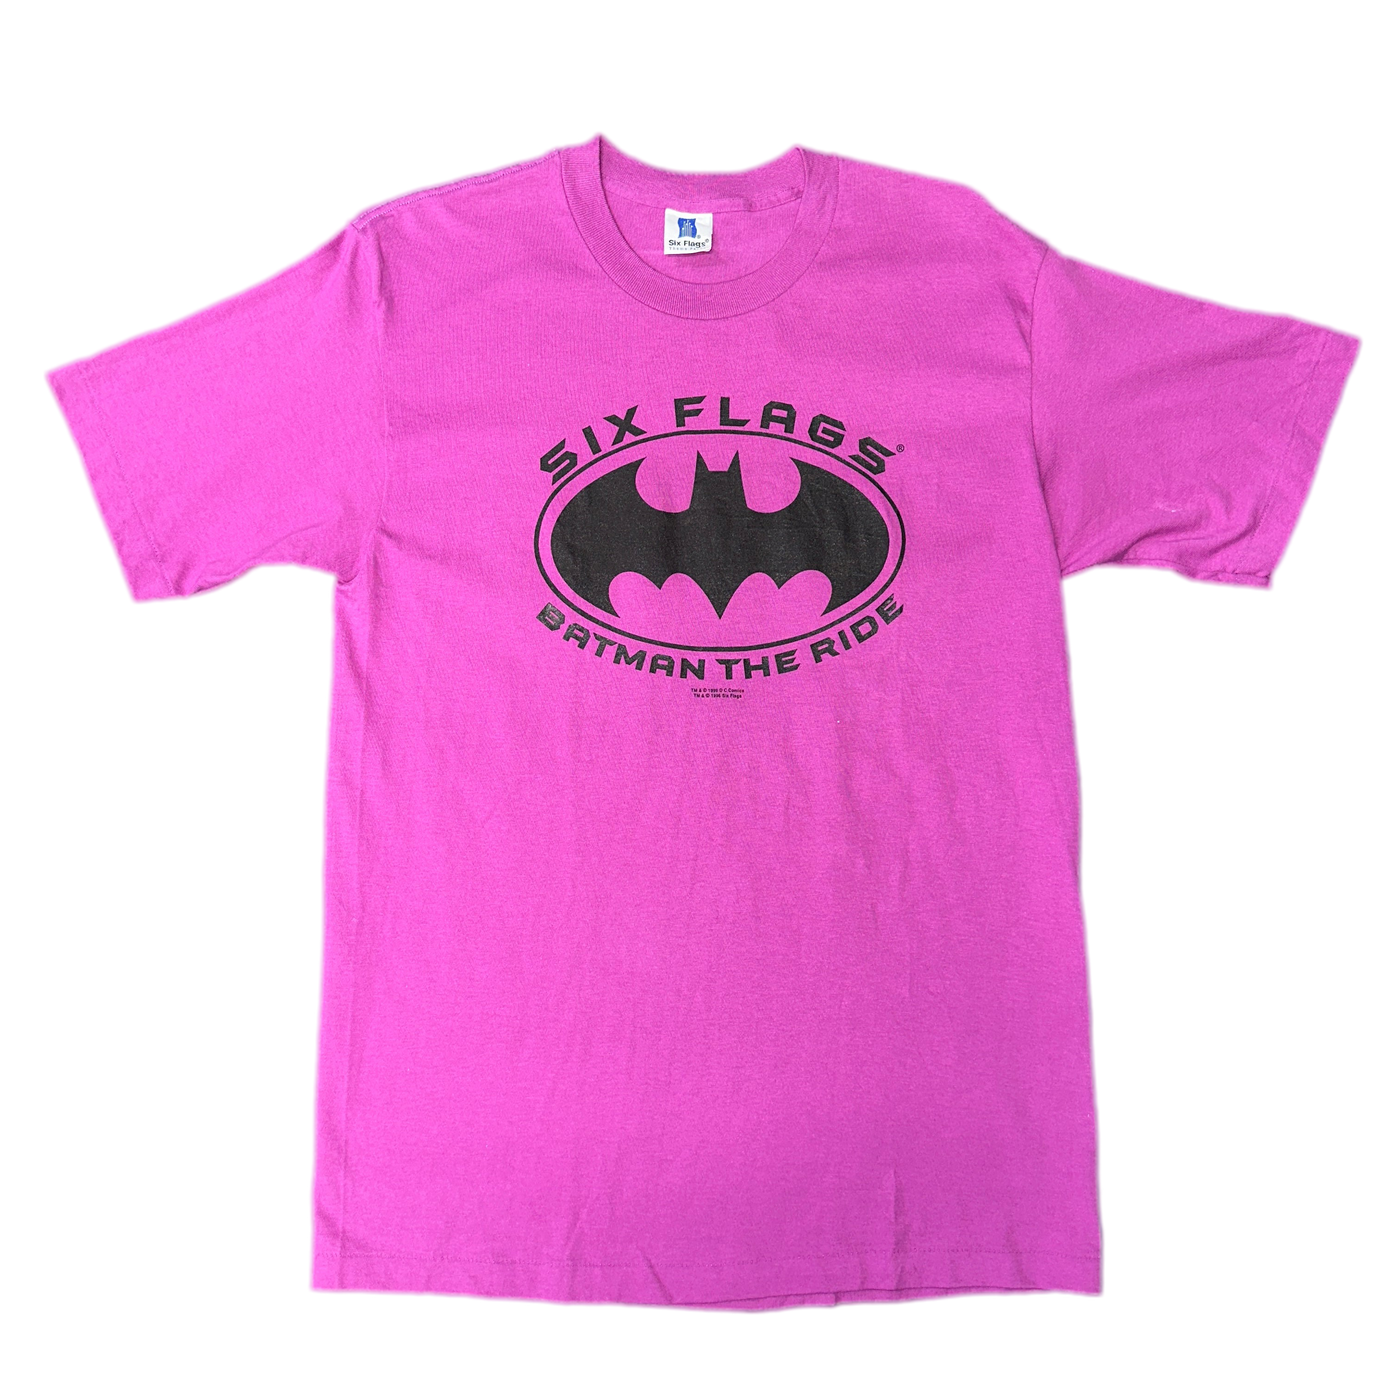 '96 Six Flags Batman The Ride Pink T-shirt sz L